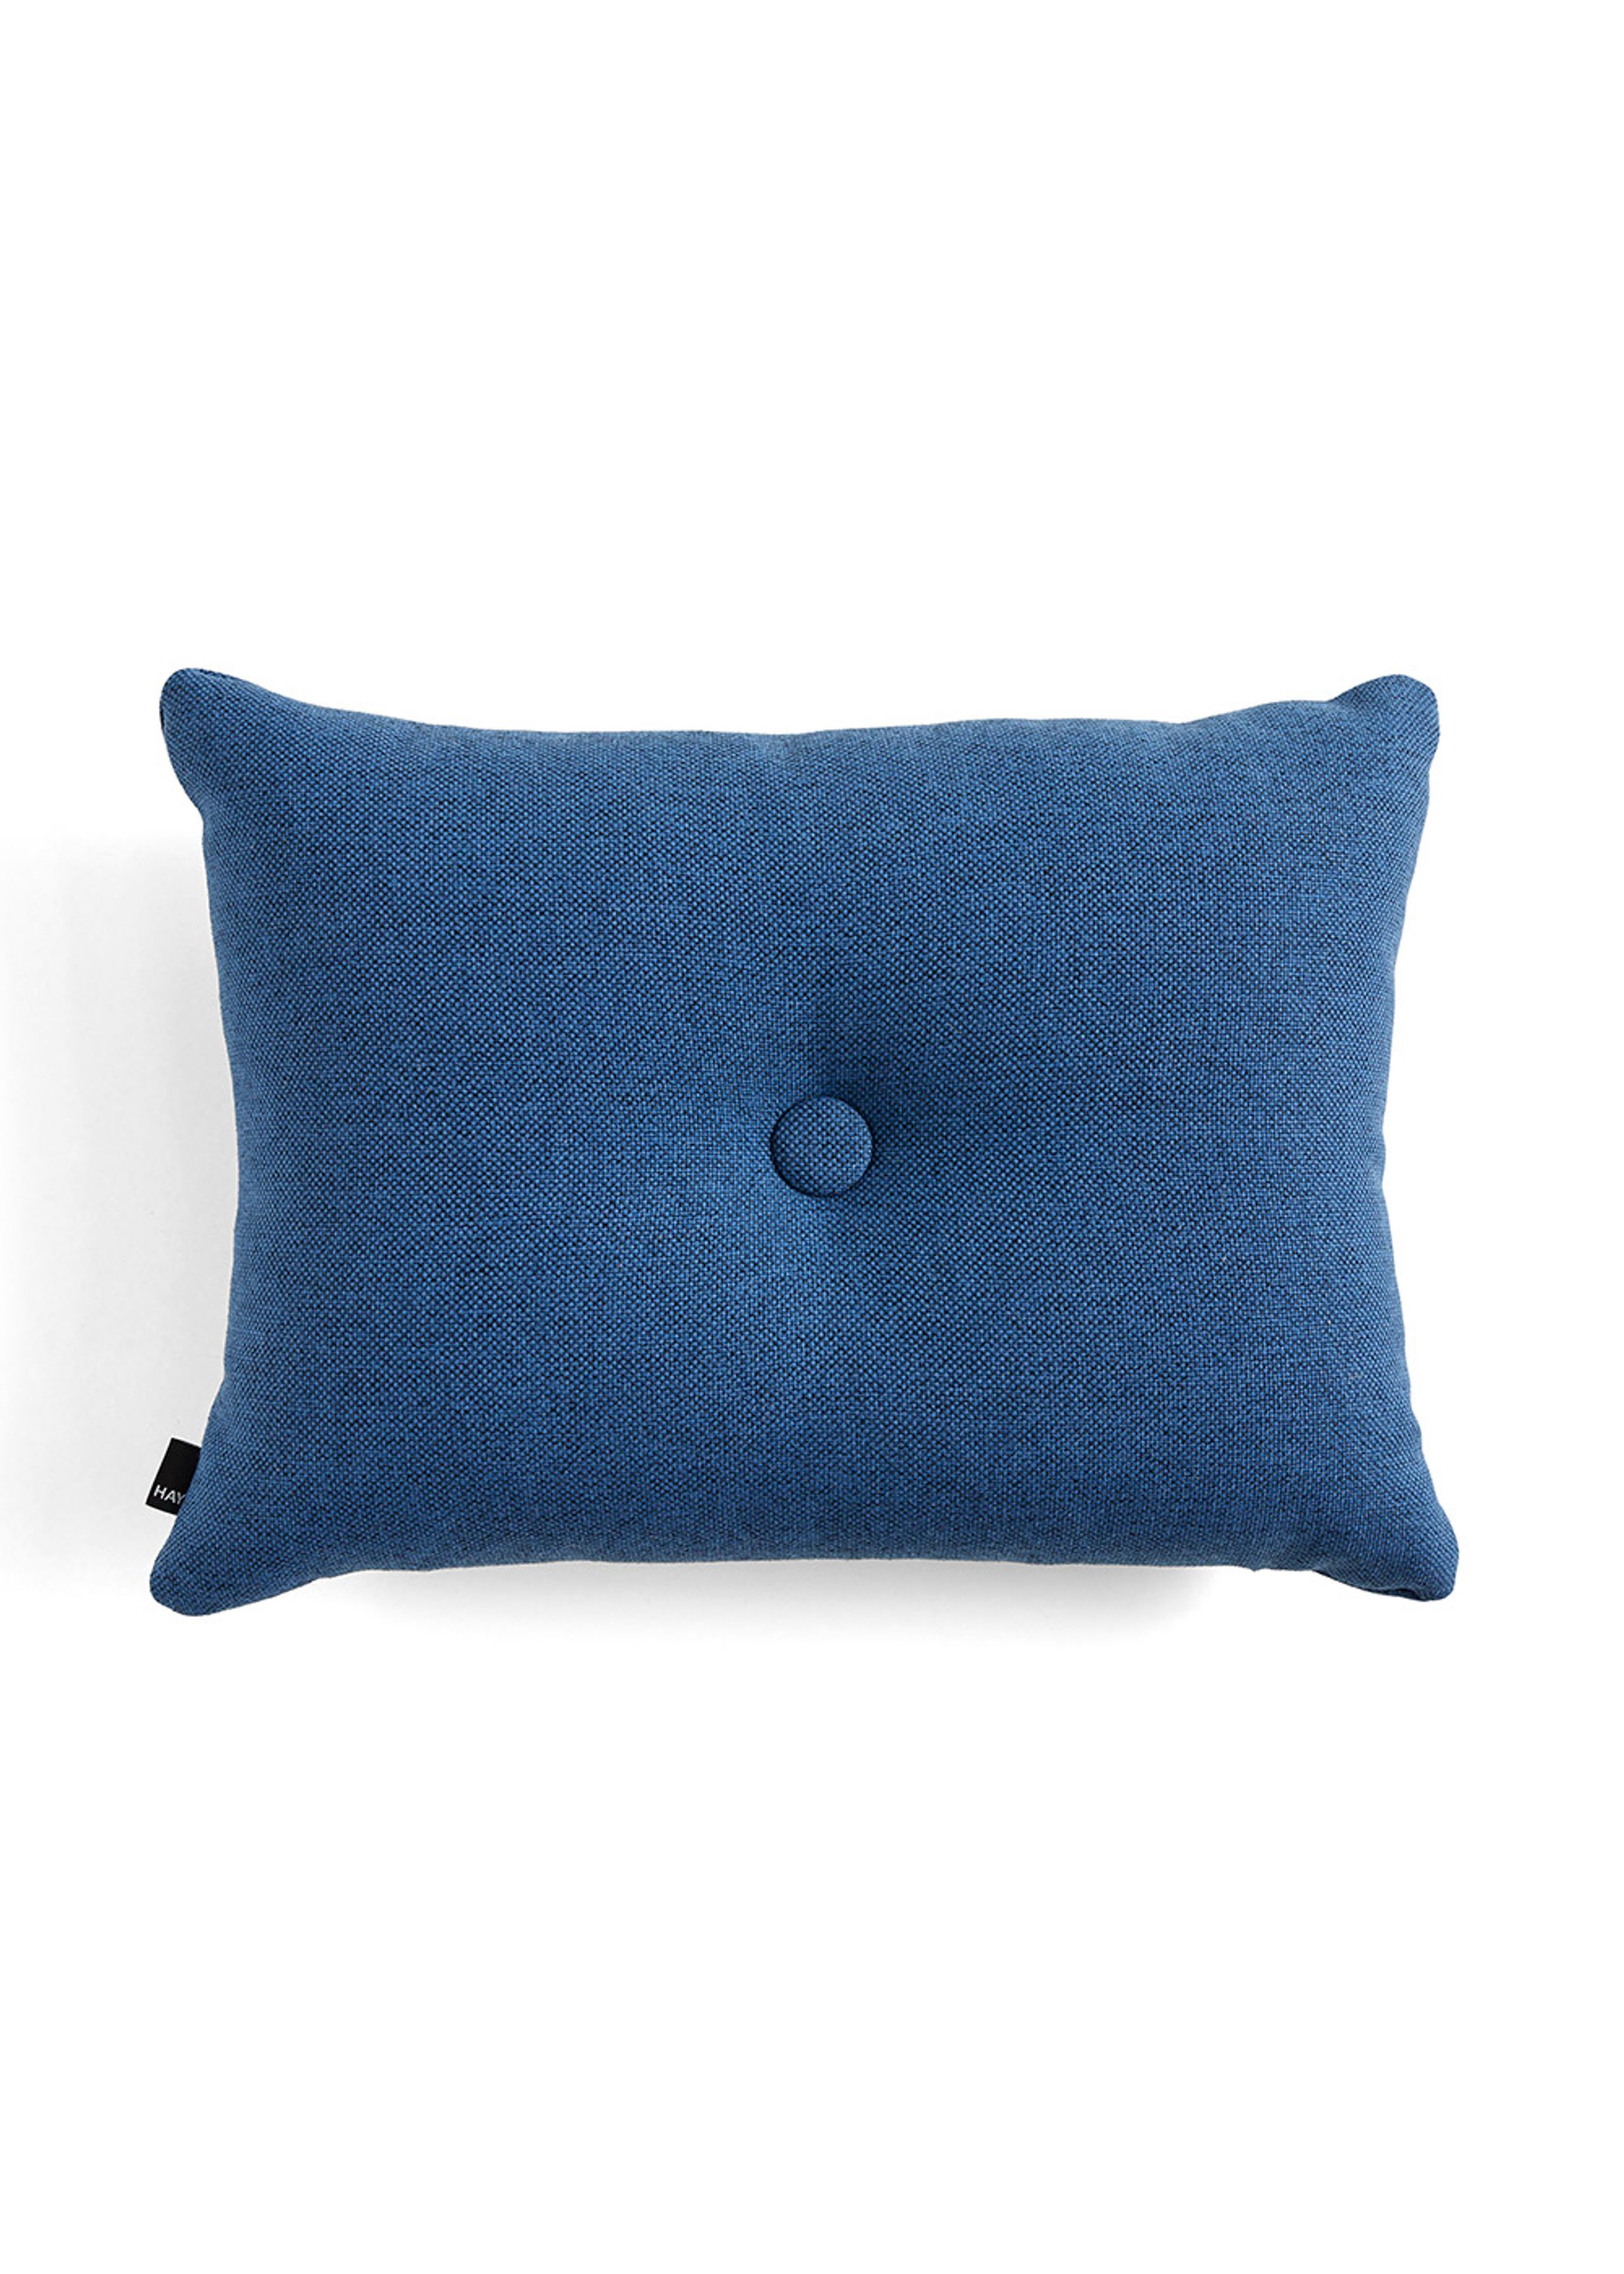 HAY - Pillow - DOT Cushion / Mode - Dark Blue